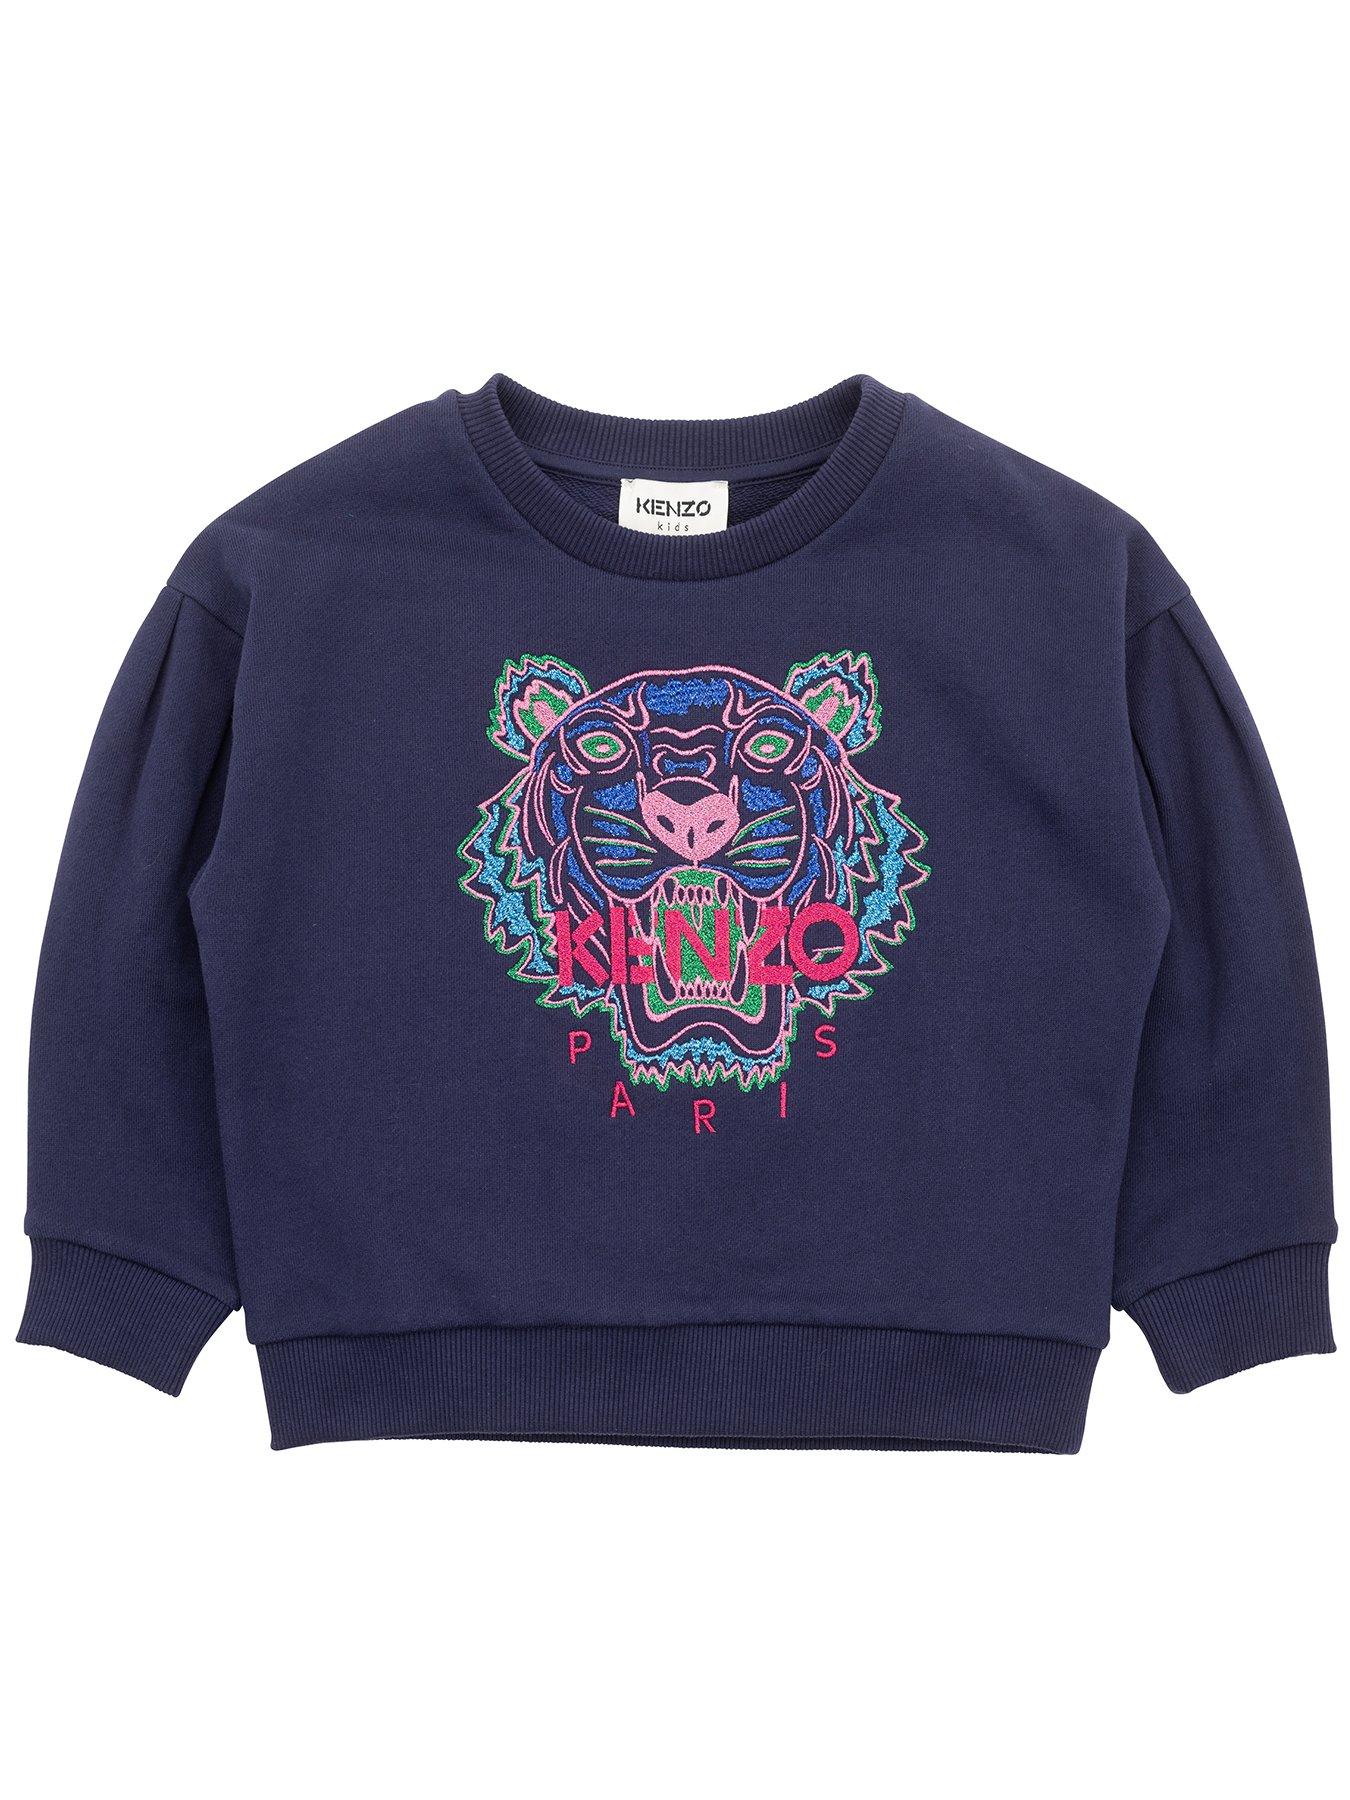 Kenzo Kids Off White Embroidered Tiger Motif Sweatshirt, Brand Size 6Y 